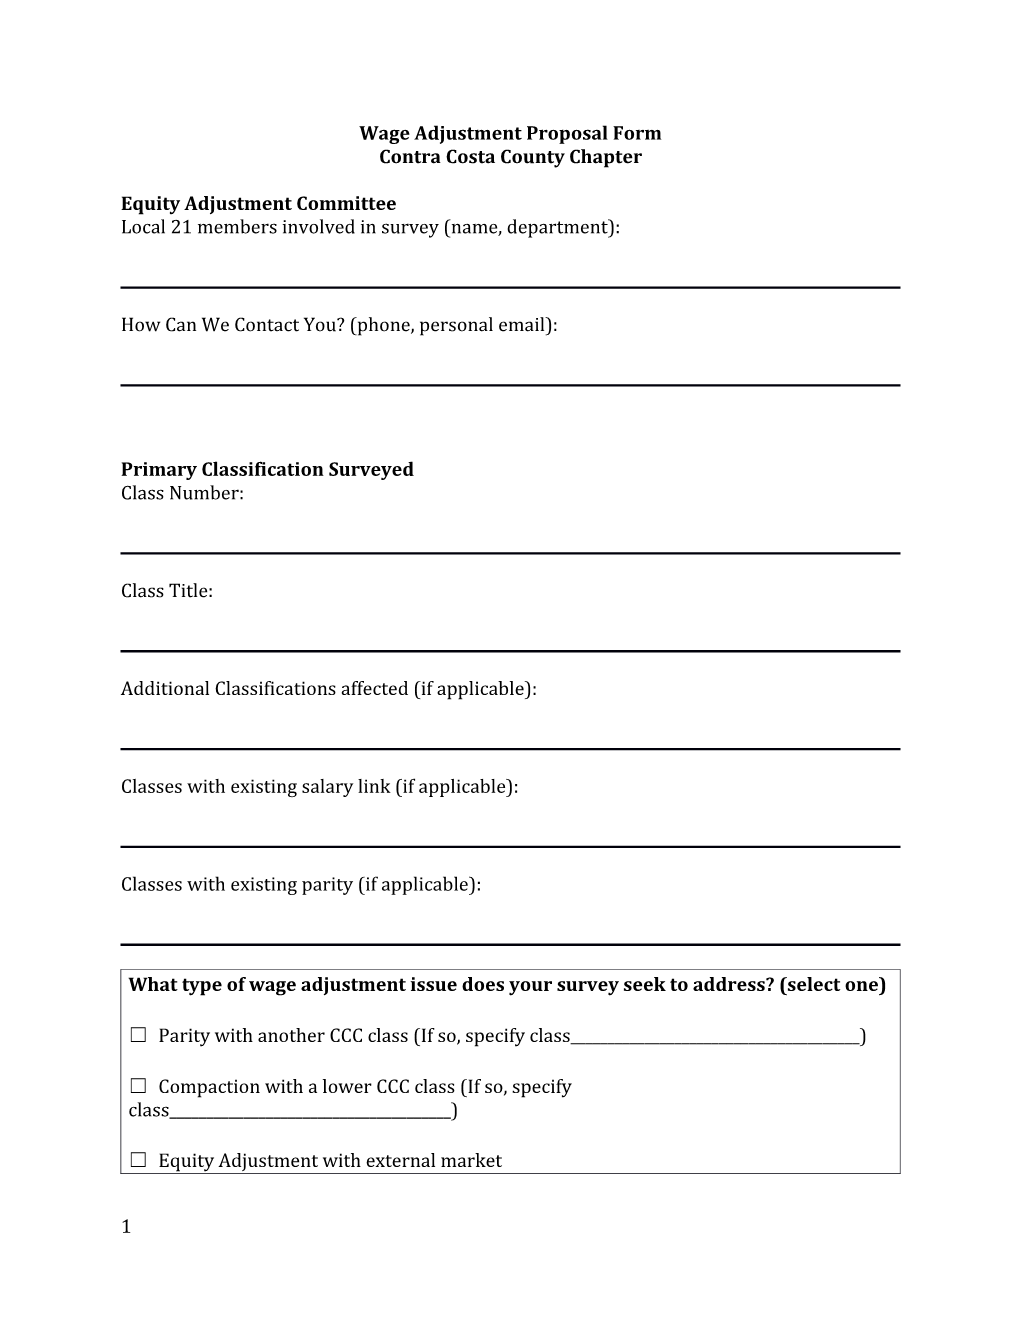 Equity Adjustment Proposal Form